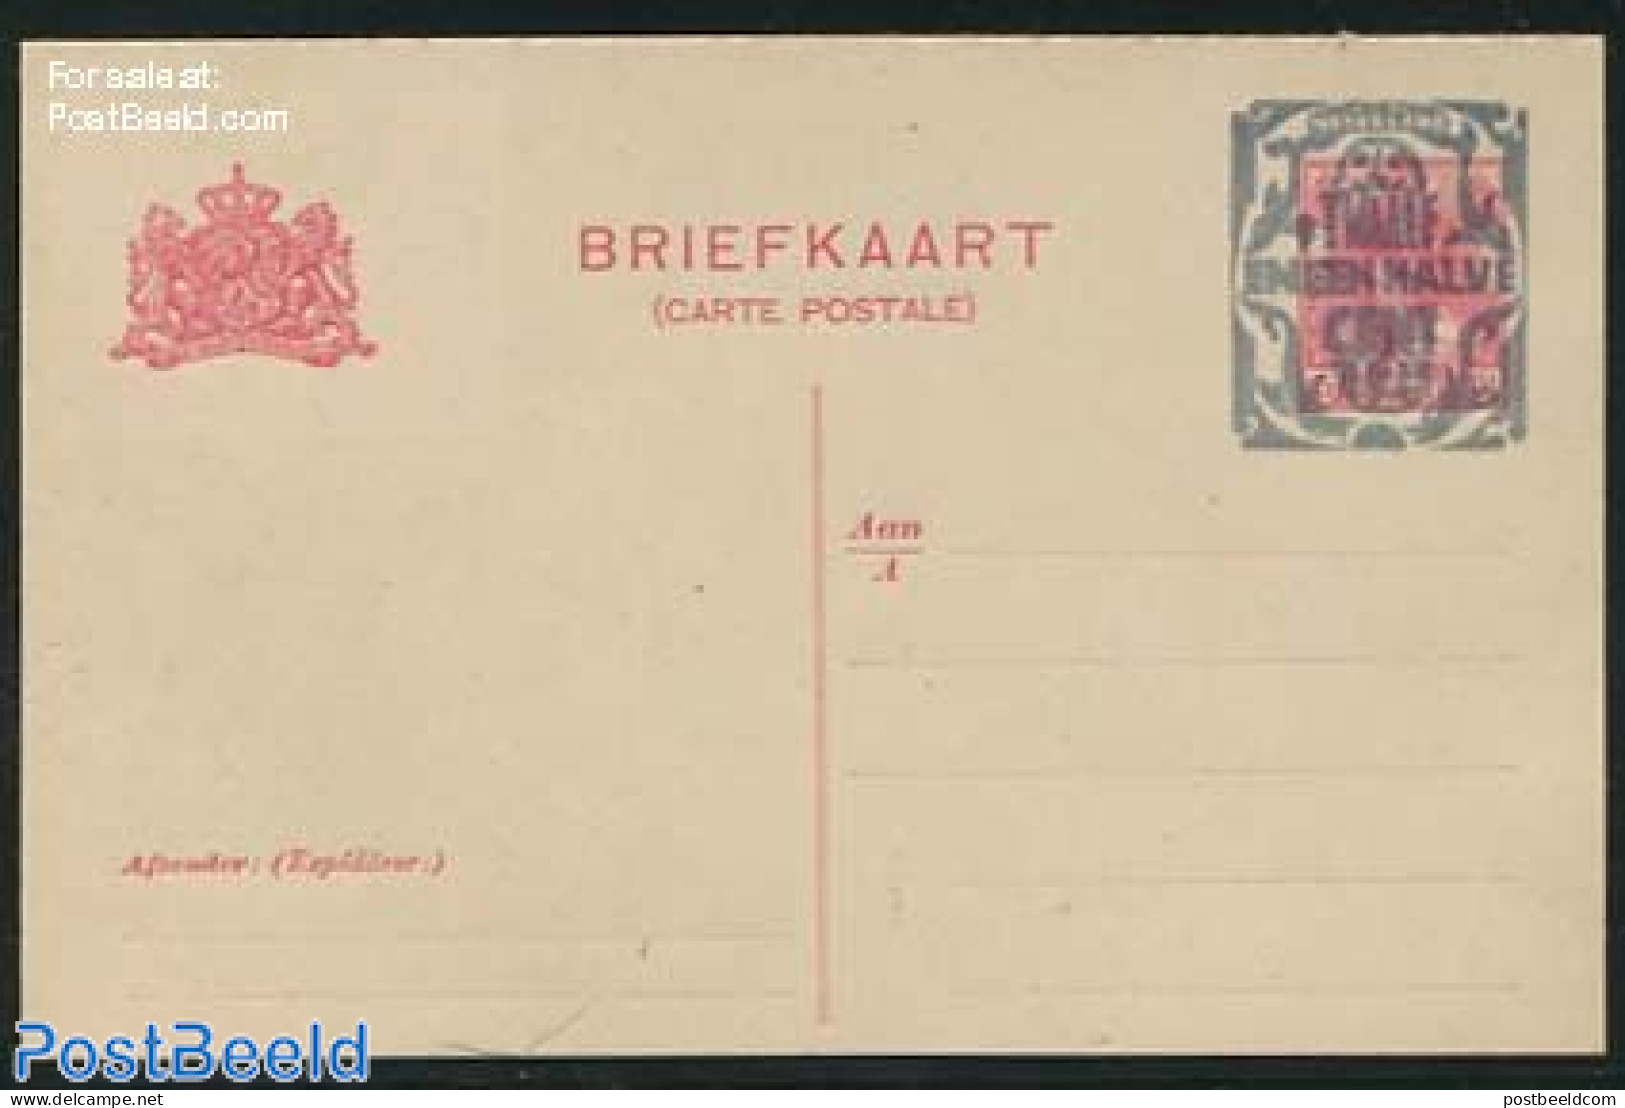 Netherlands 1921 Postcard 12.5c On 5c (long Dividing Line), Unused Postal Stationary - Covers & Documents